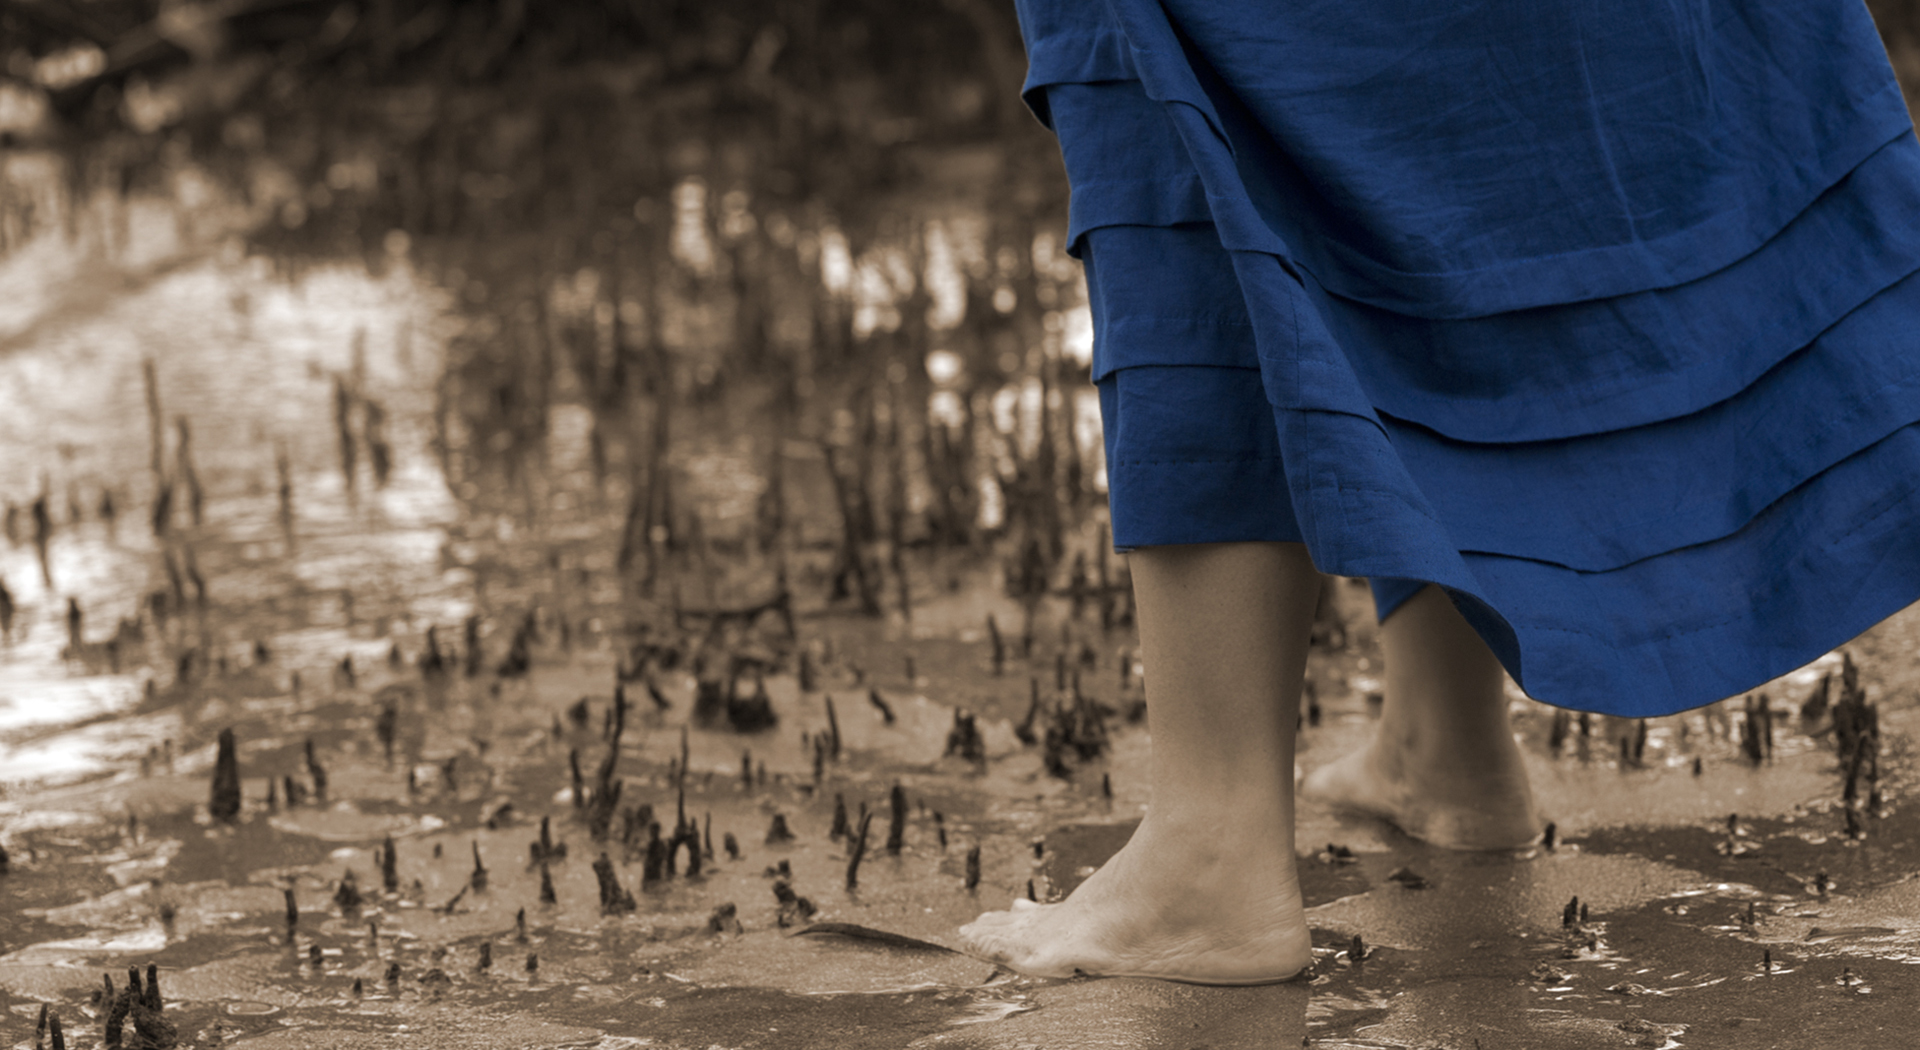 Photo of feet standing in muddy mangroves